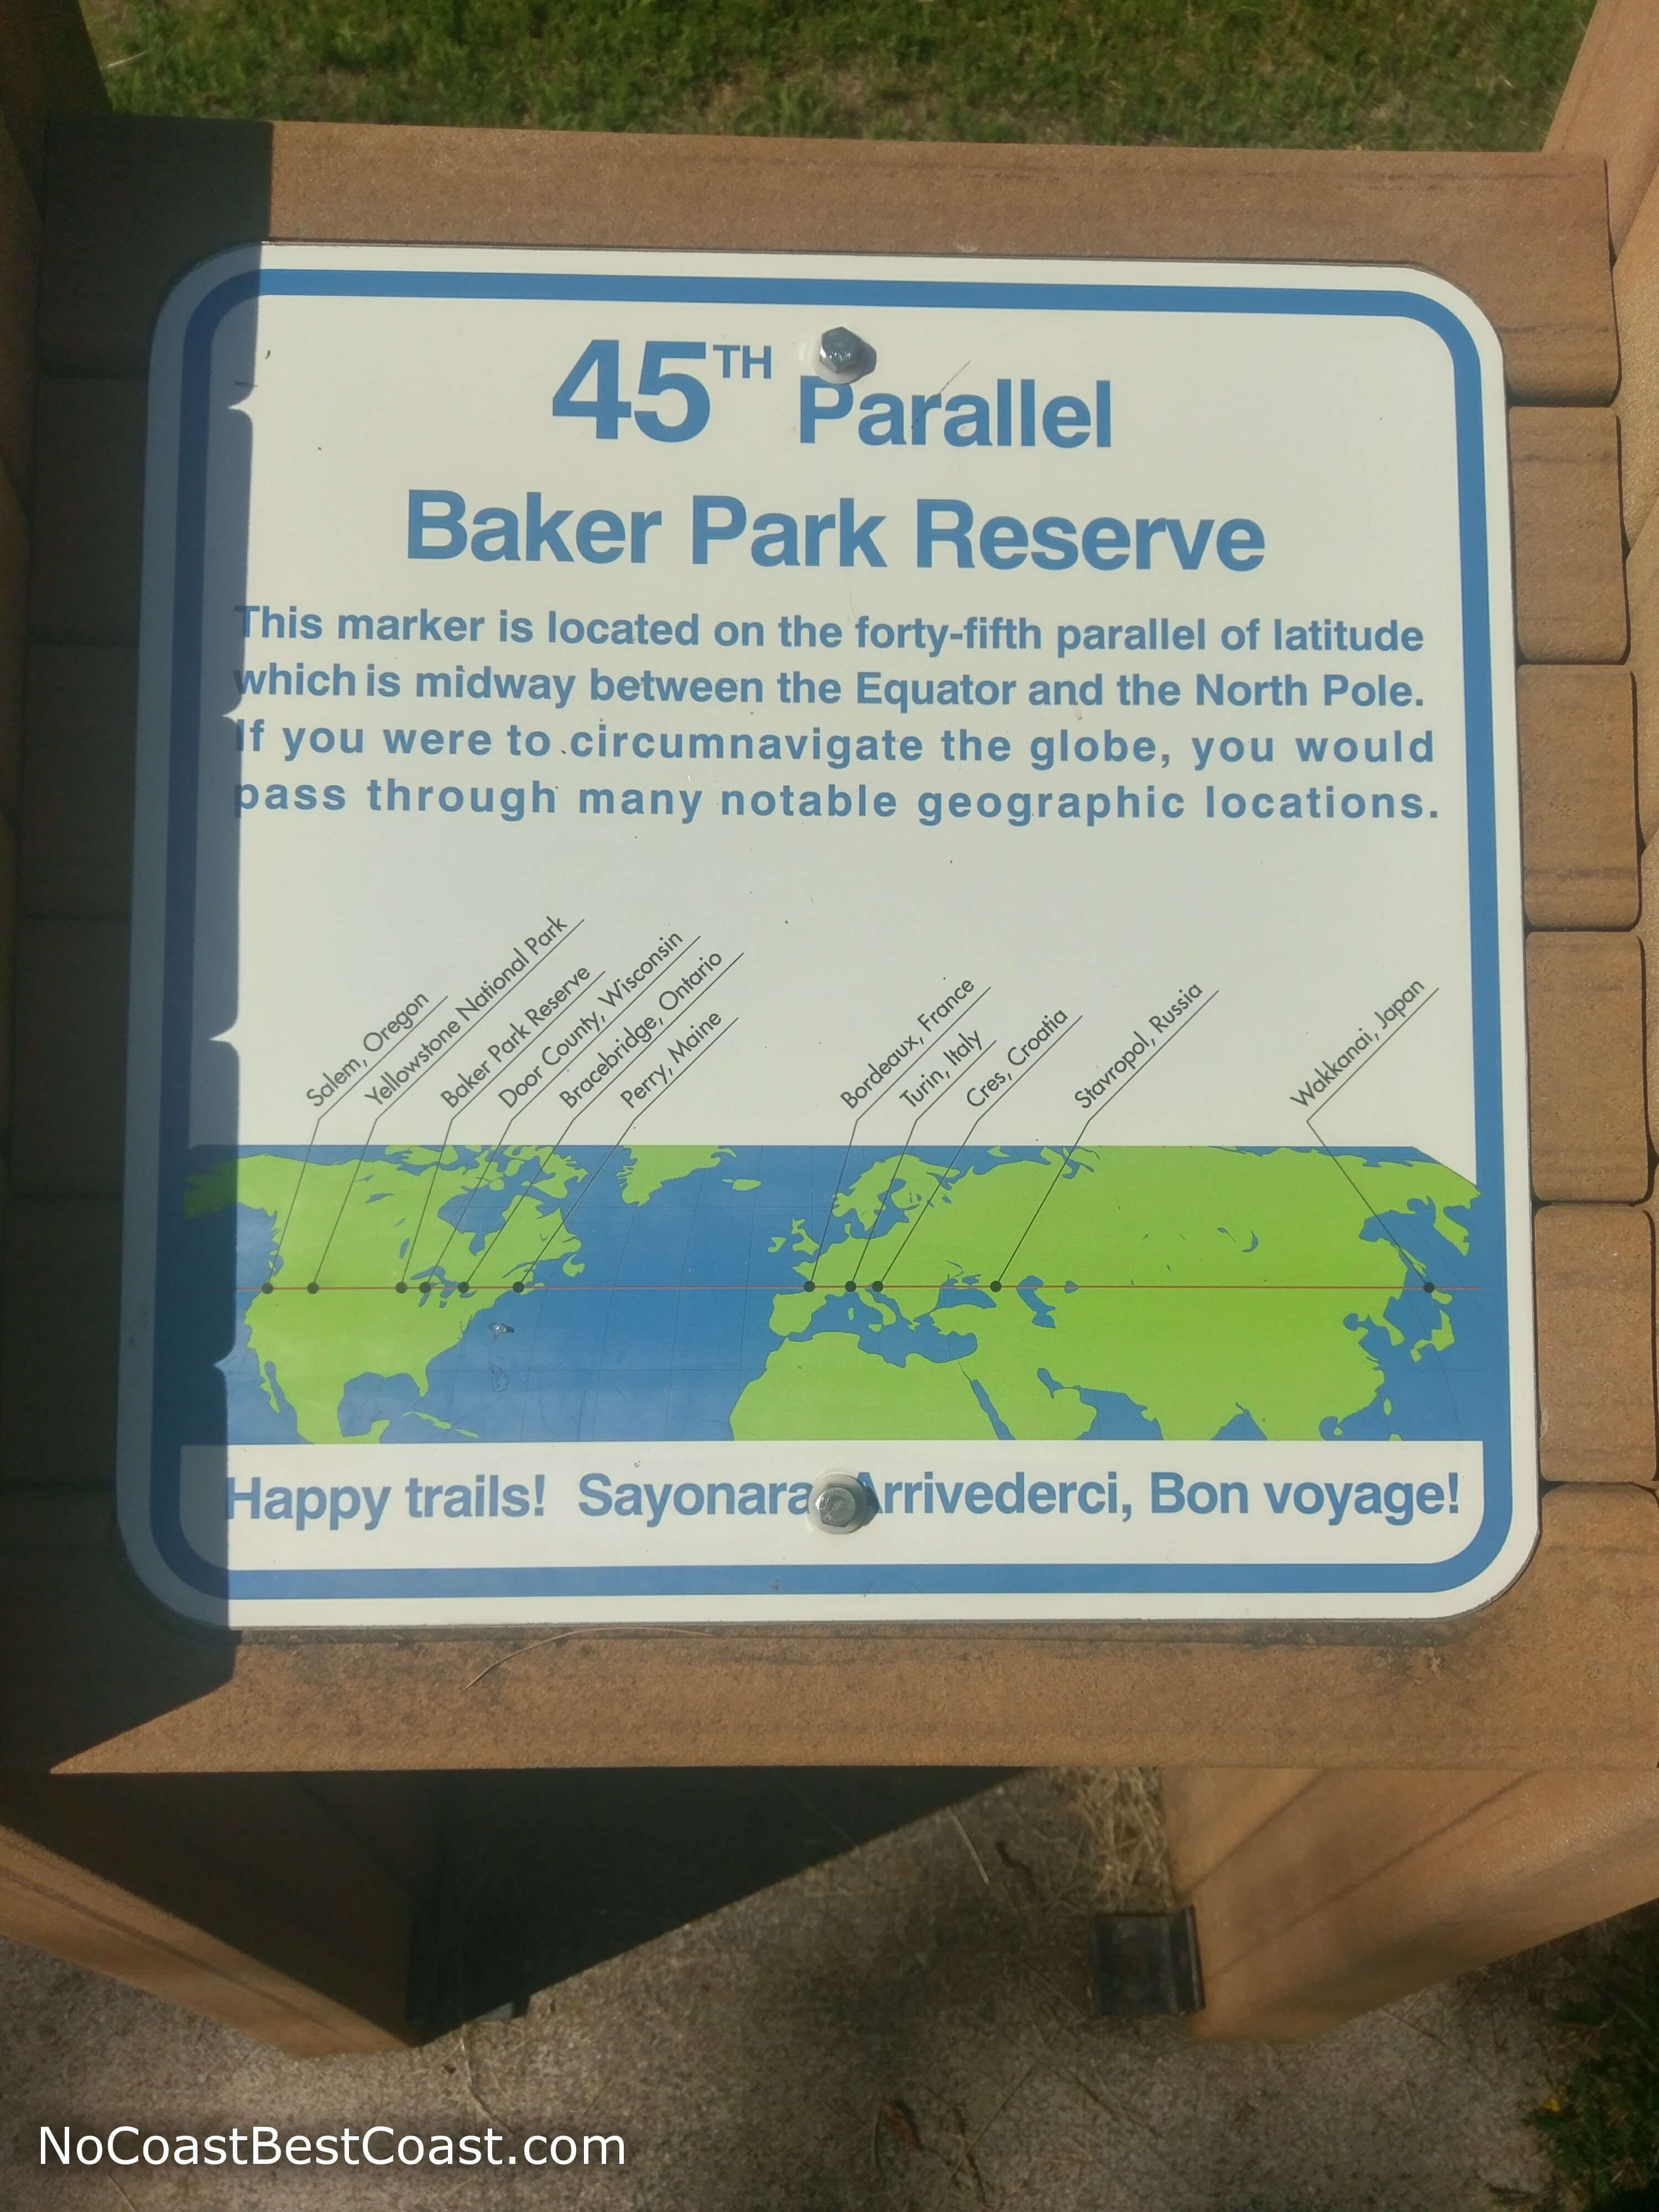 This marker designates the 45th parallel